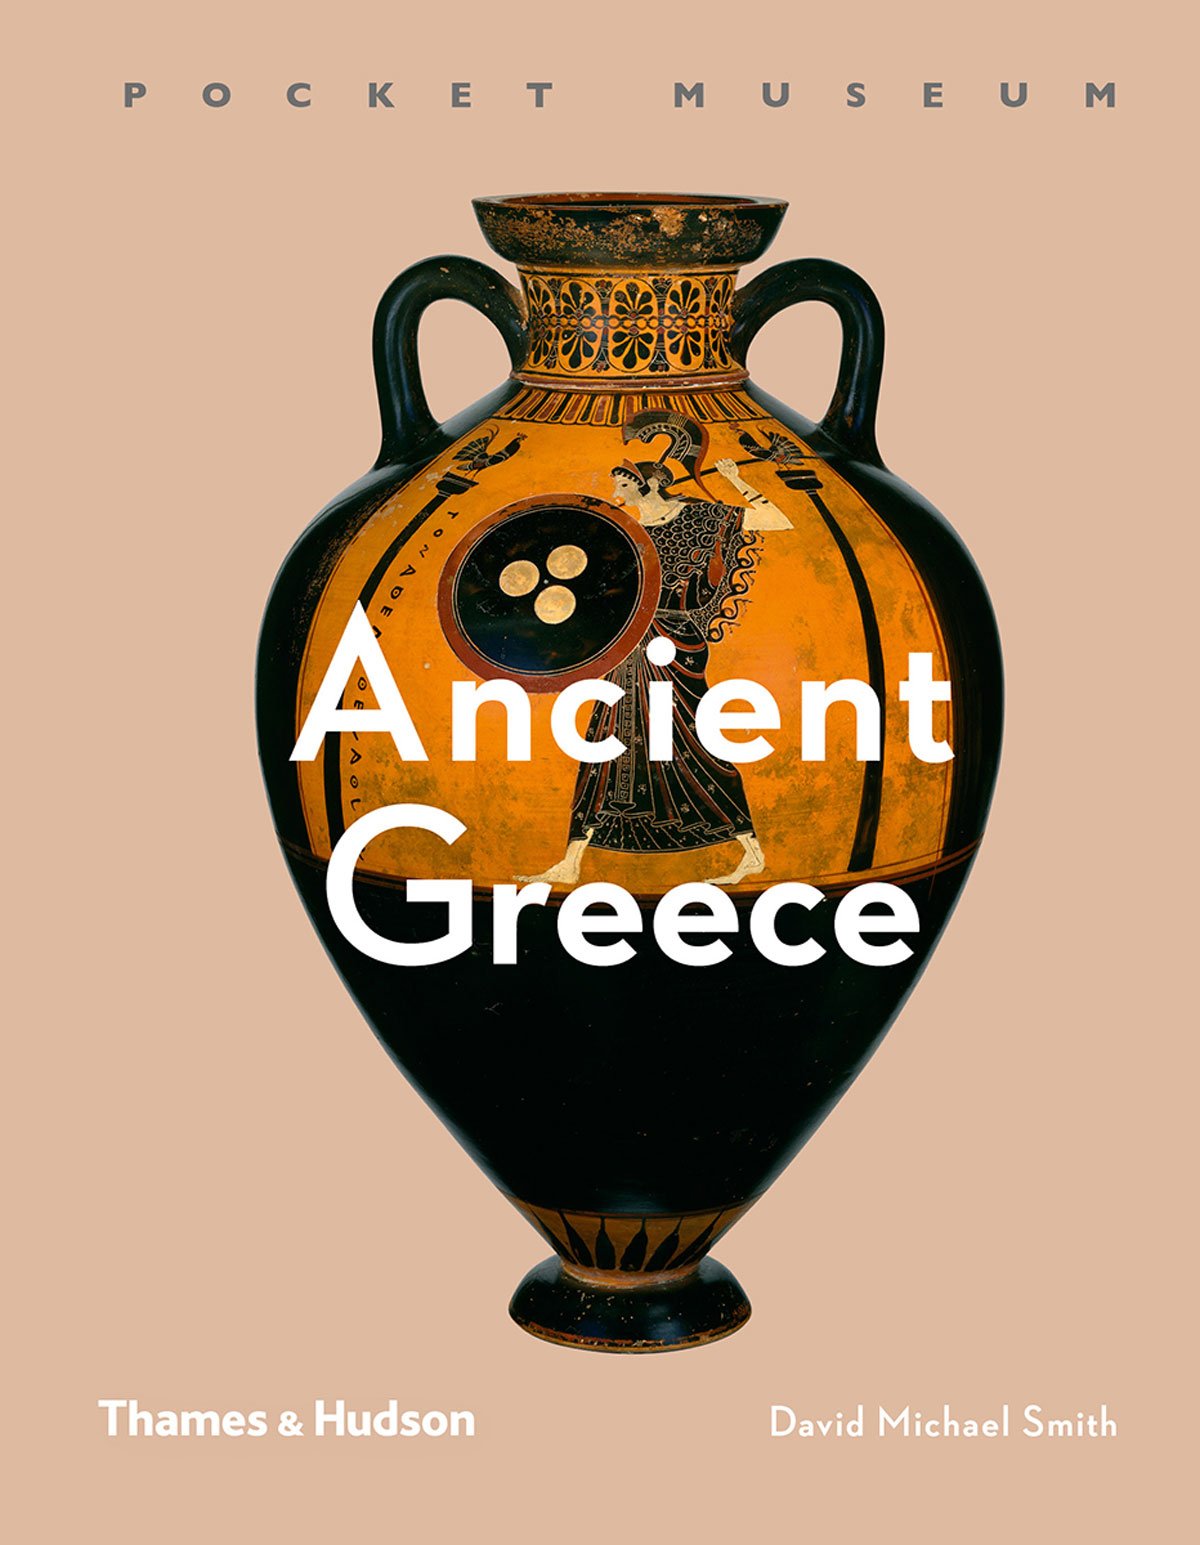 Pocket Museum - Ancient Greece | David Michael Smith